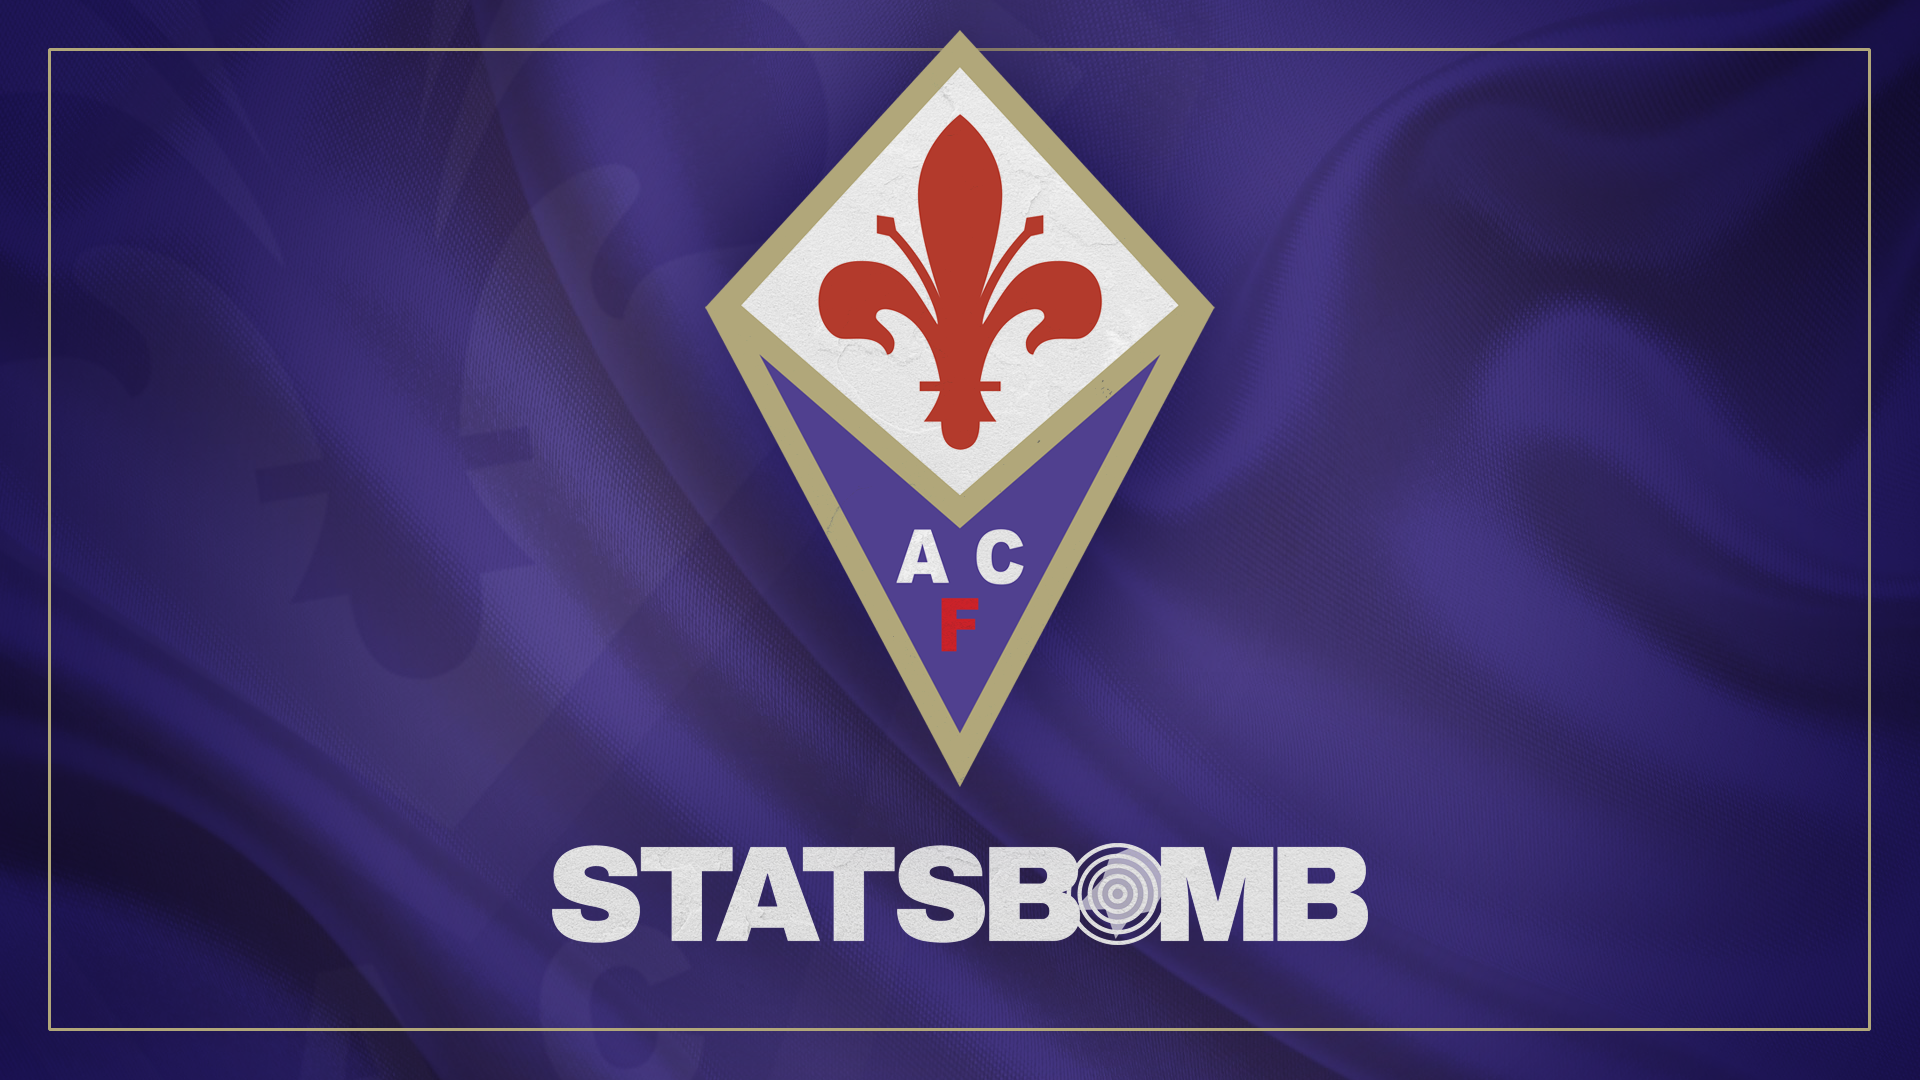 StatsBomb Sign Partnership Agreement With ACF Fiorentina